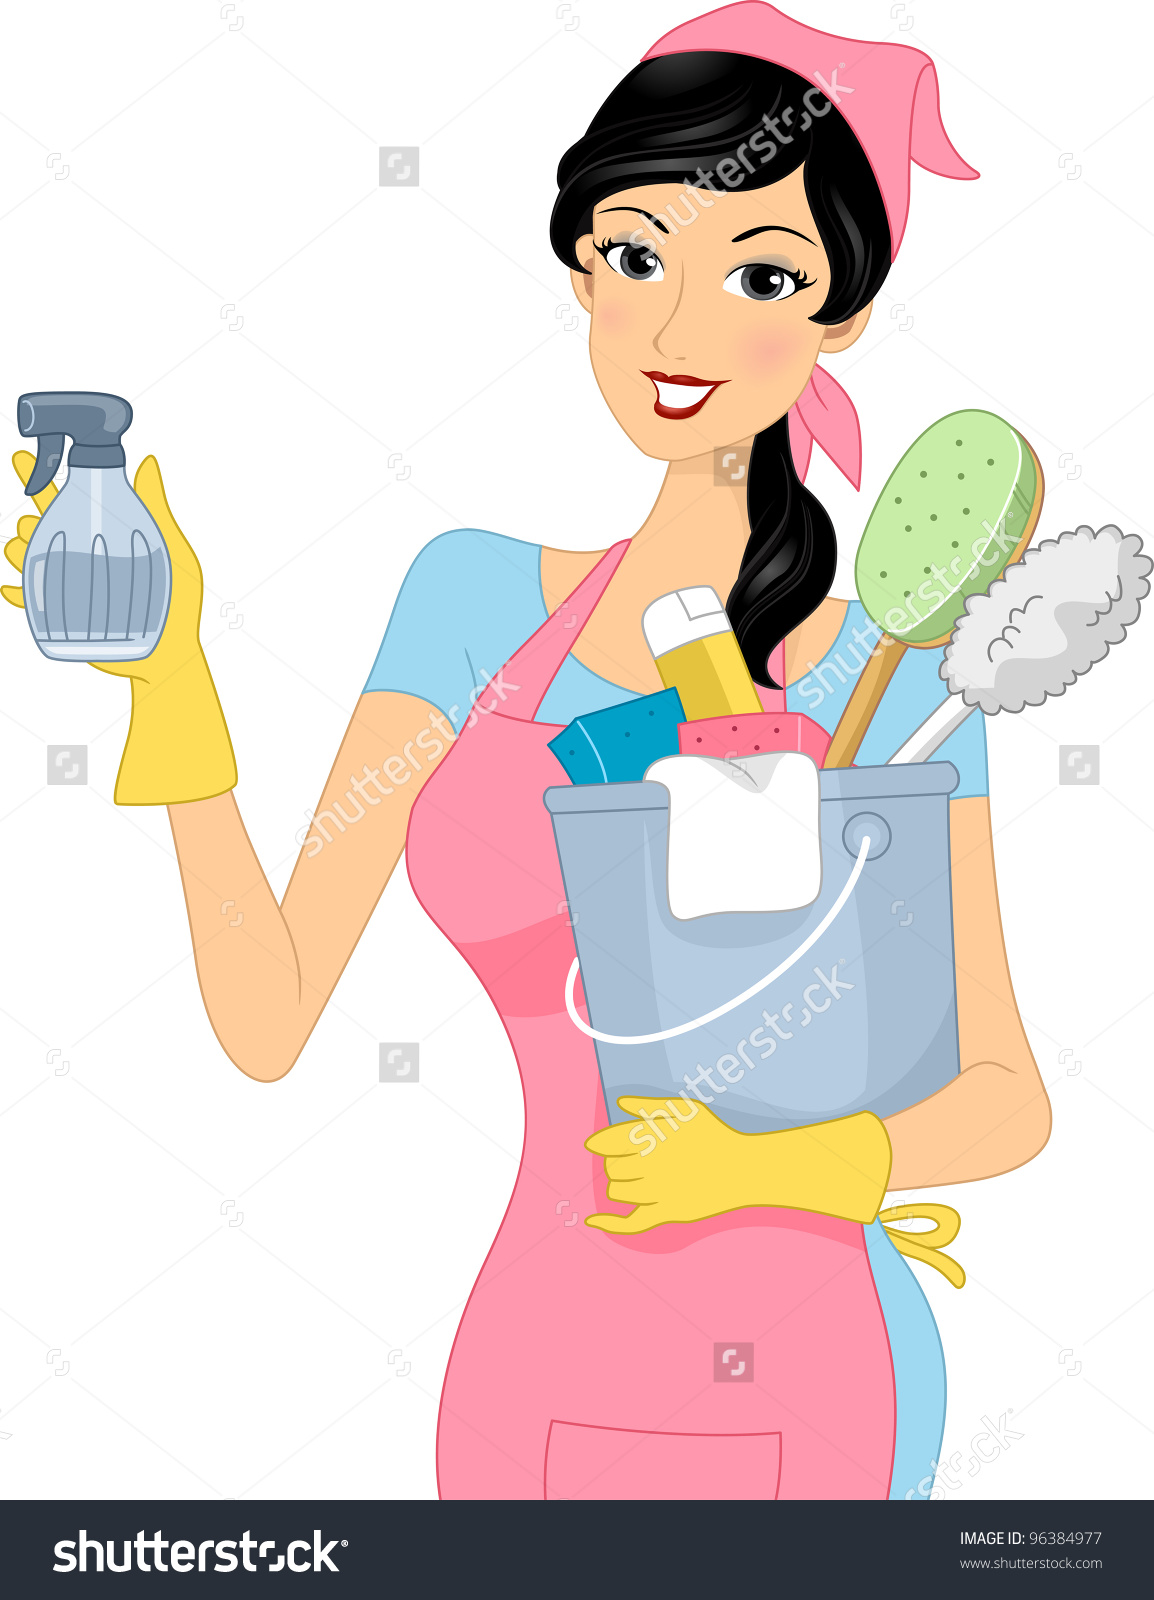 Wanda cleaning